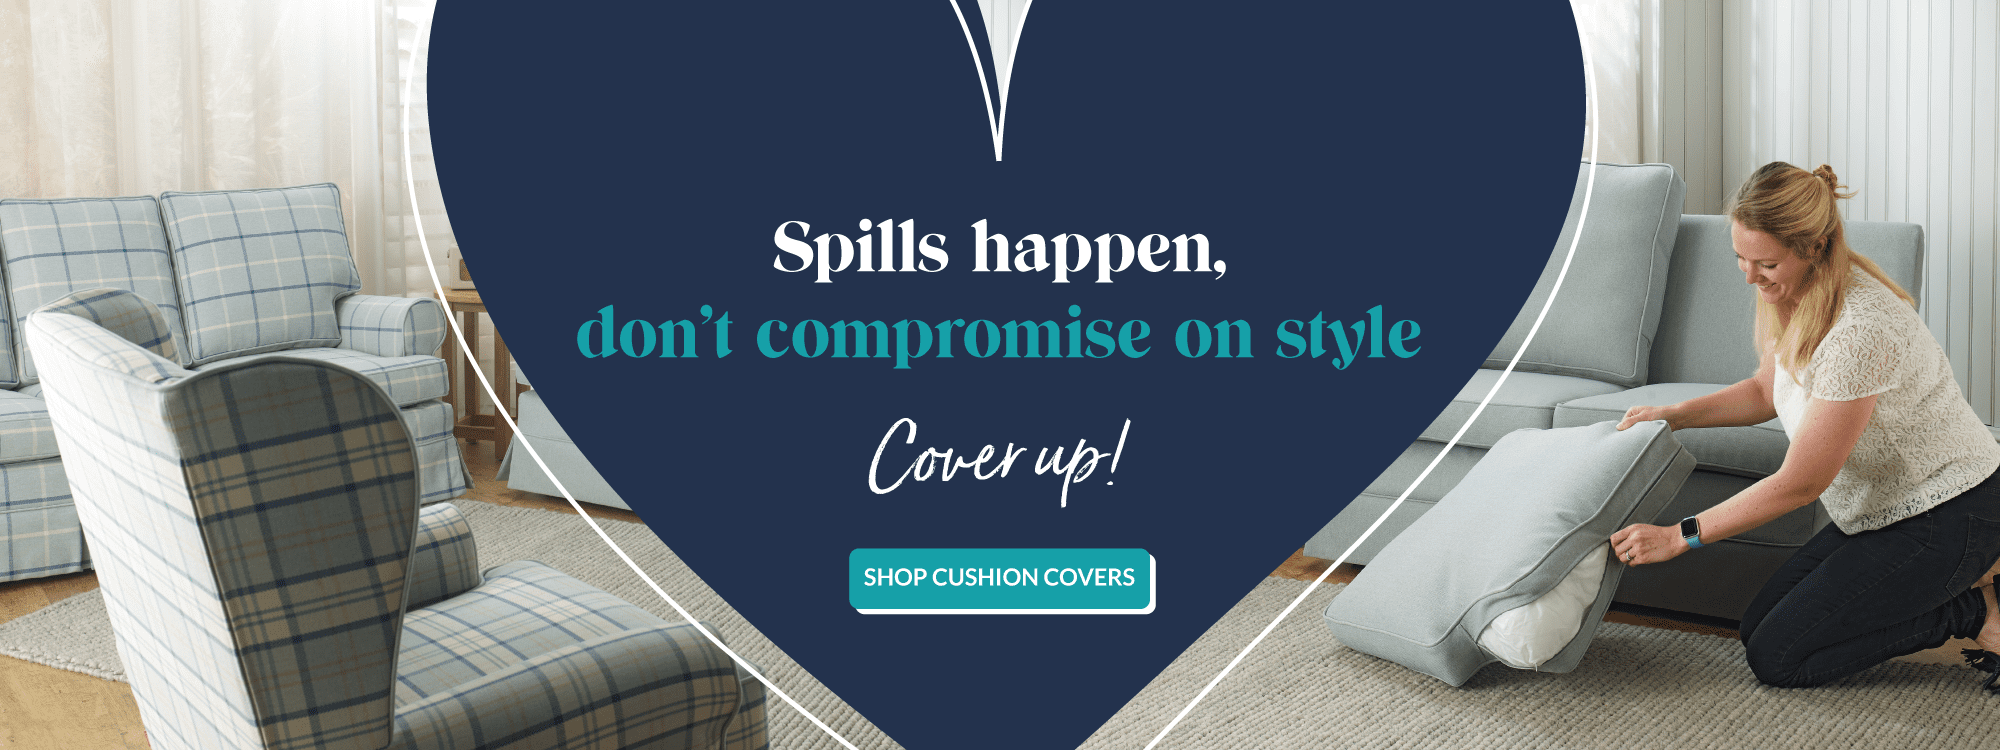 Spills happen, don't comprise on style.